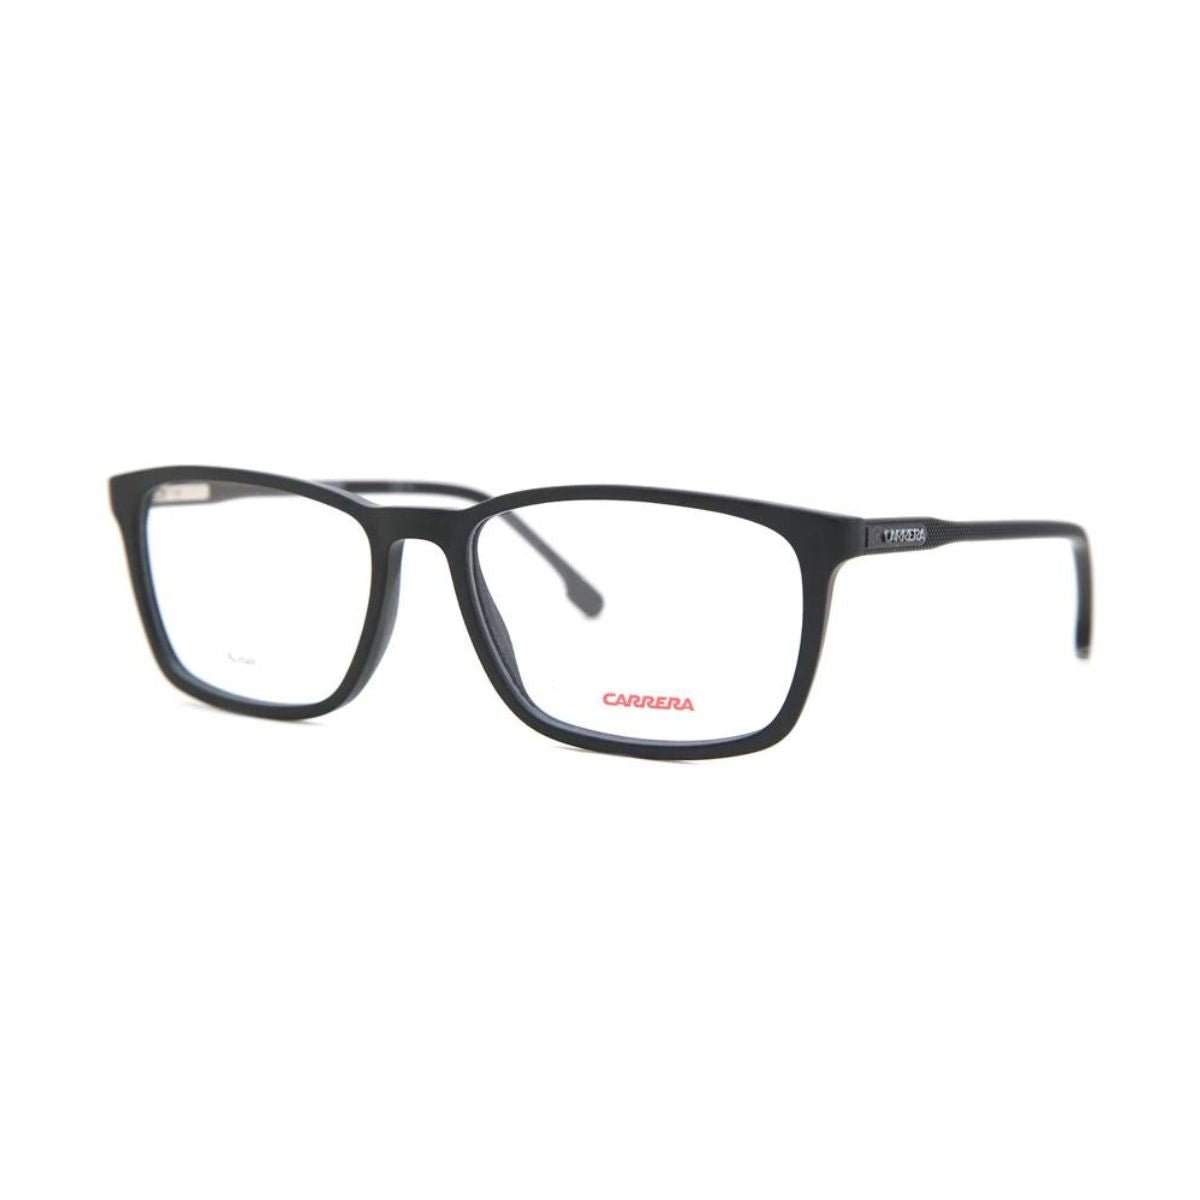 "buy Carrera 265 003 prescription eyewear frames for men and women online at optorium"